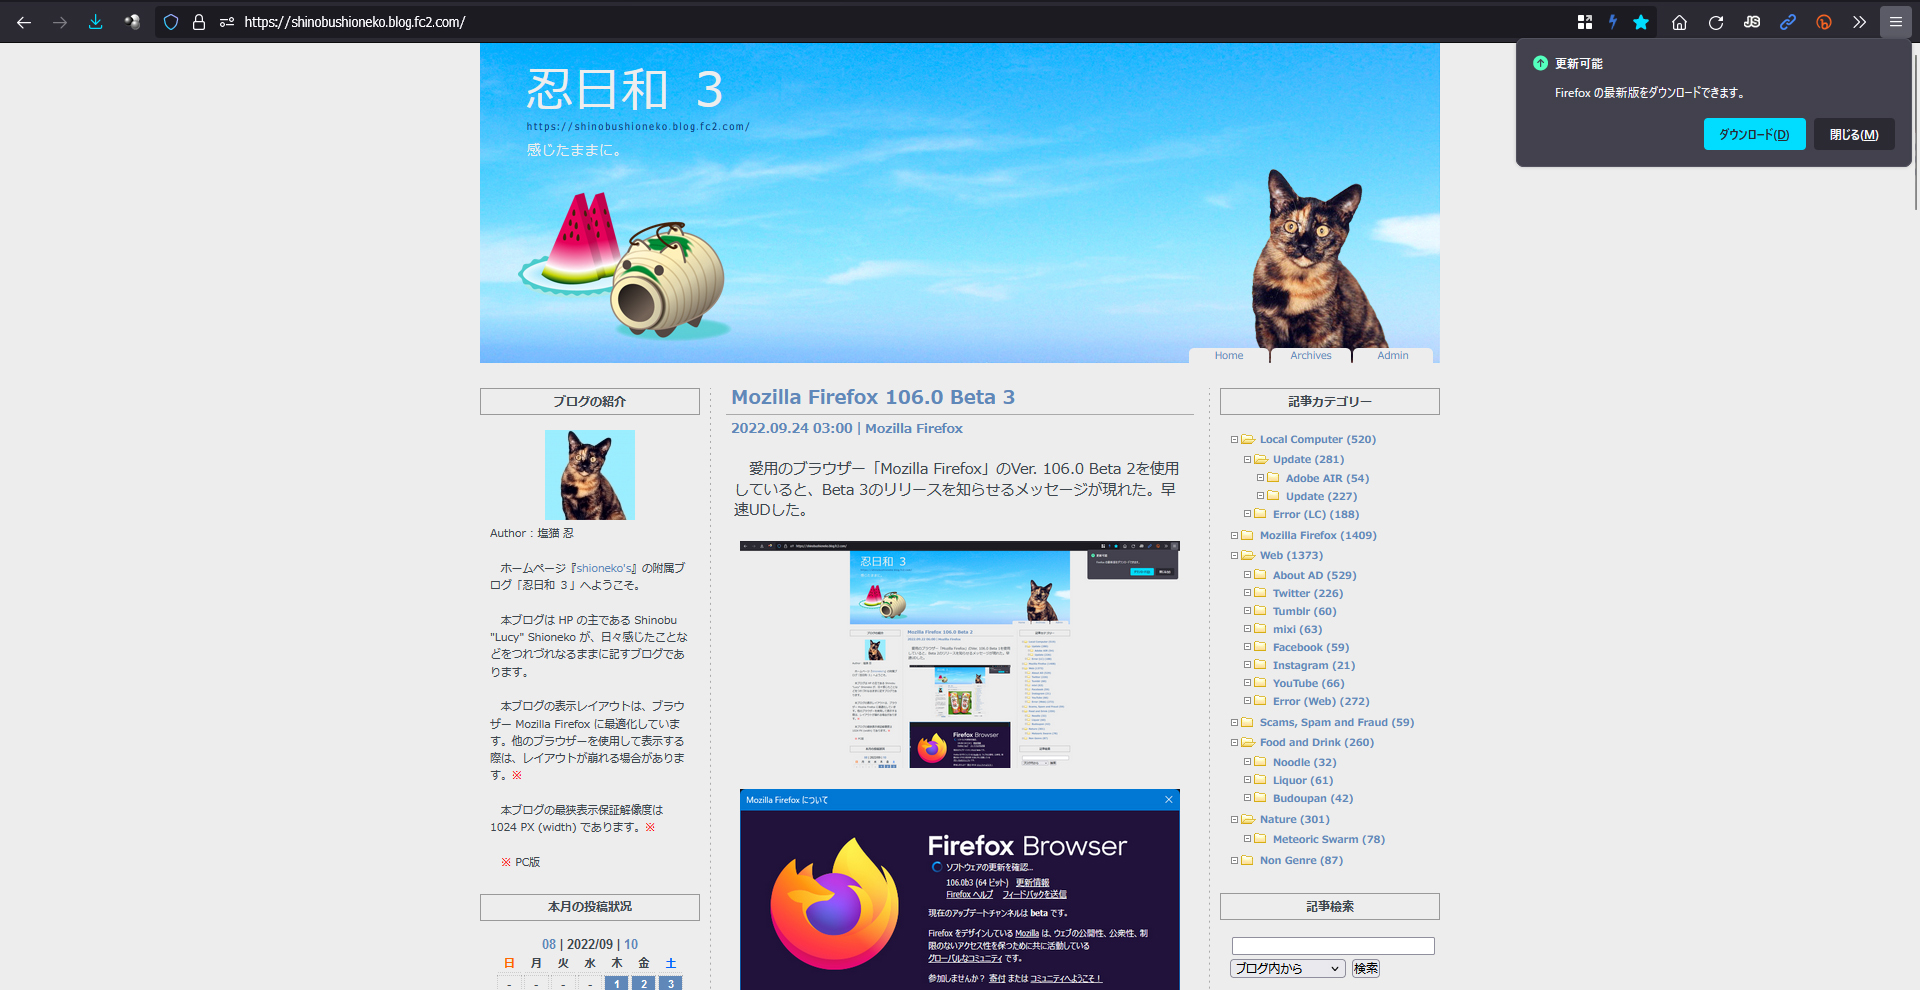 Mozilla Firefox 106.0 Beta 4